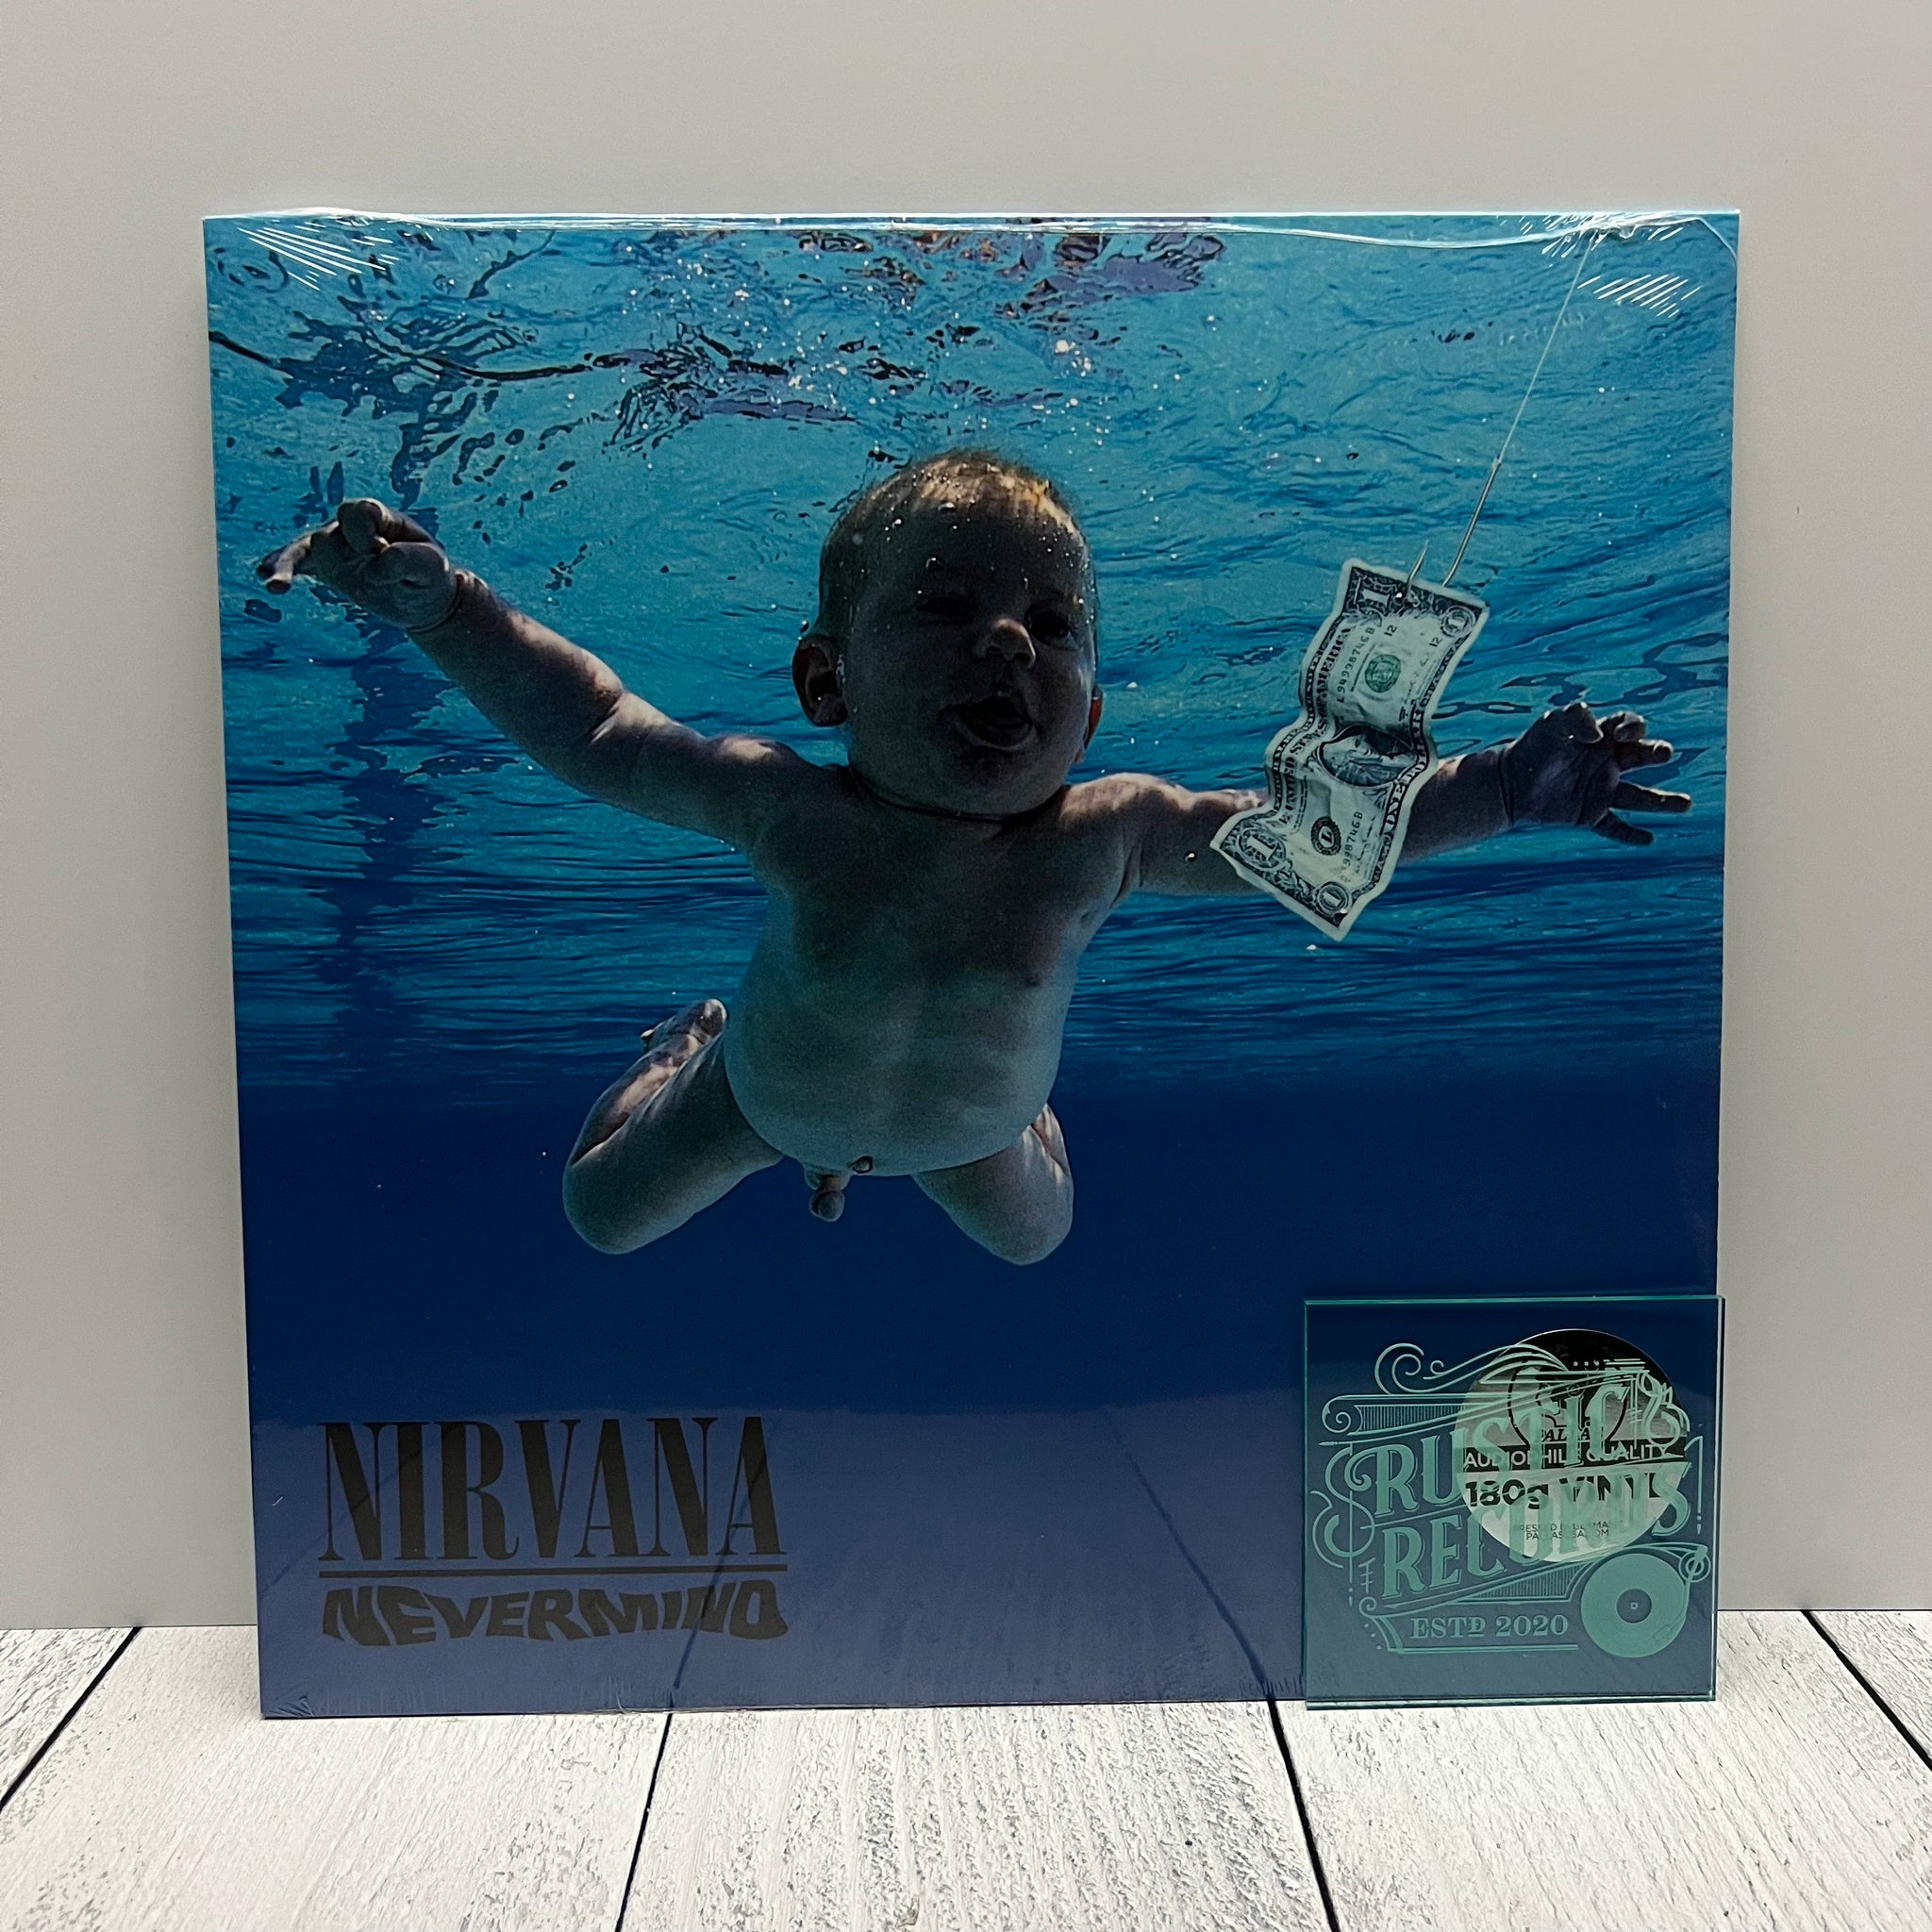 Nirvana - Nevermind (Pallas Pressing)